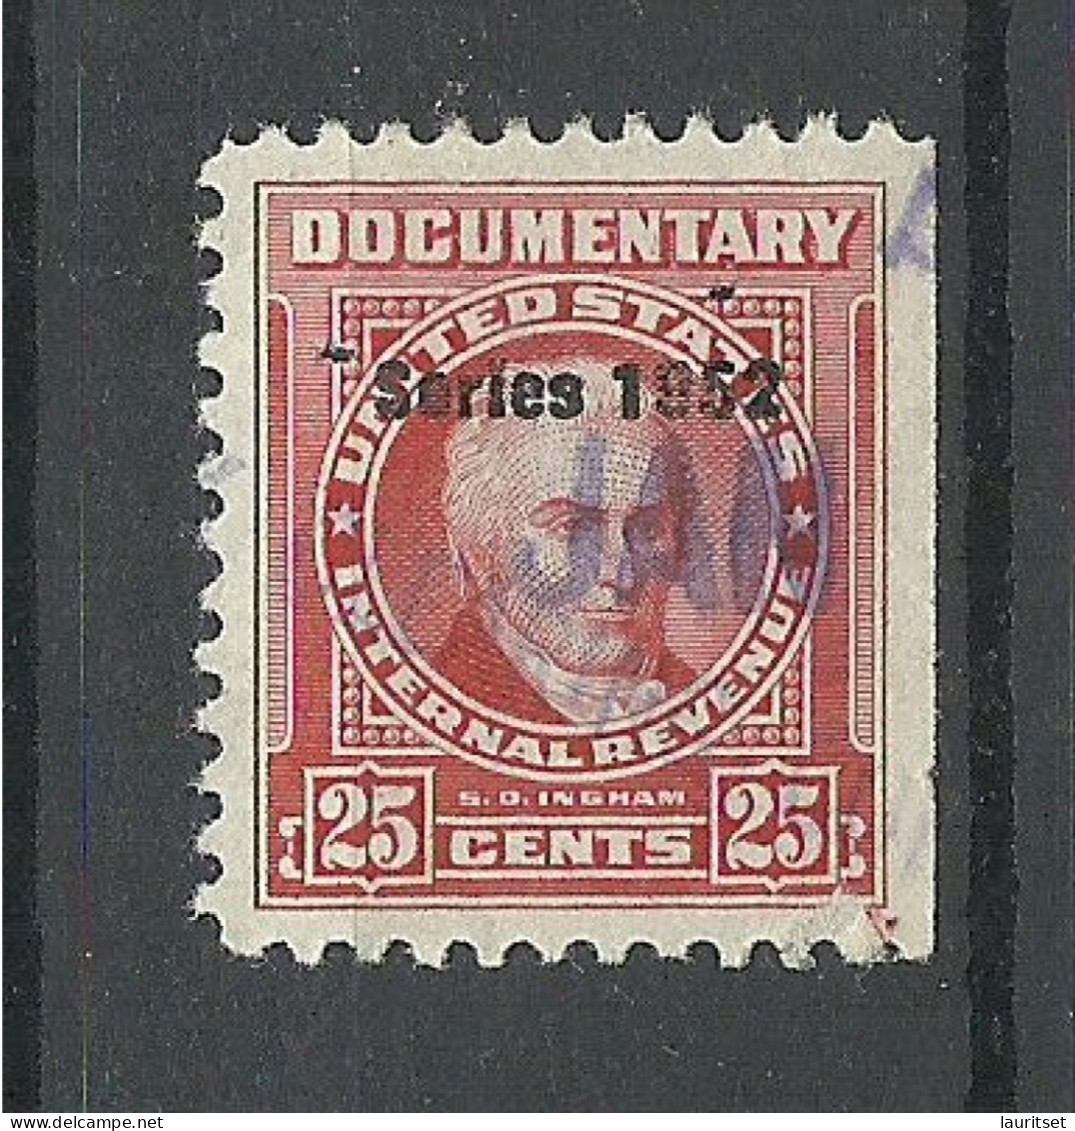 USA Documentary Tax Int. Revenue Taxe Series 1952 Ingham, O - Fiscali